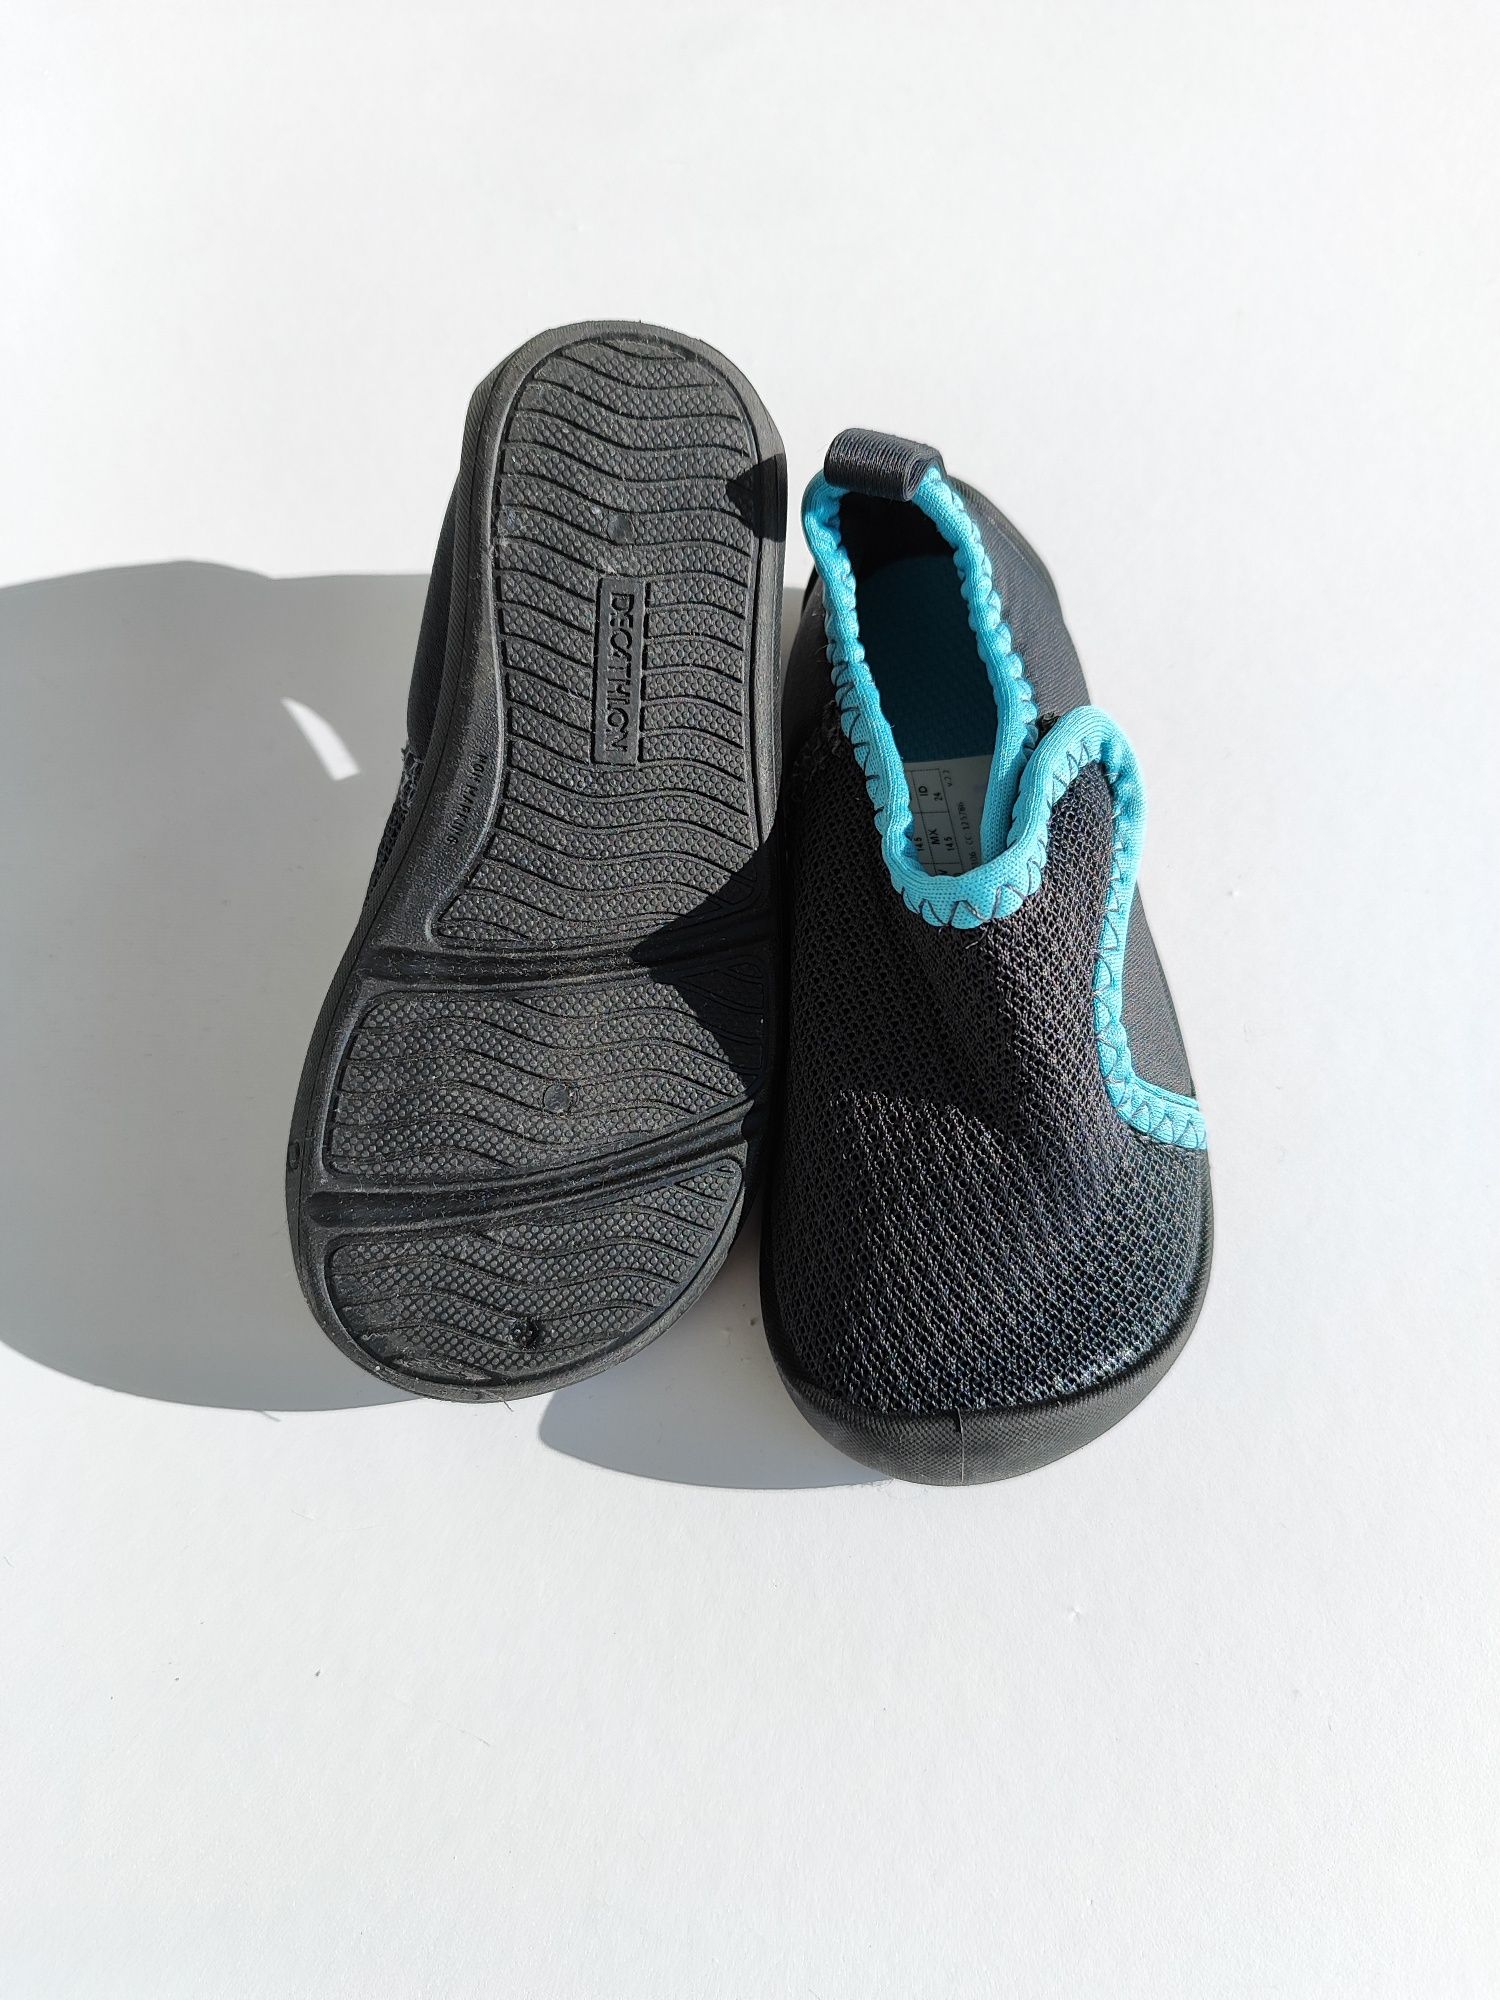 Buty dla dzieci Decathlon Domyos